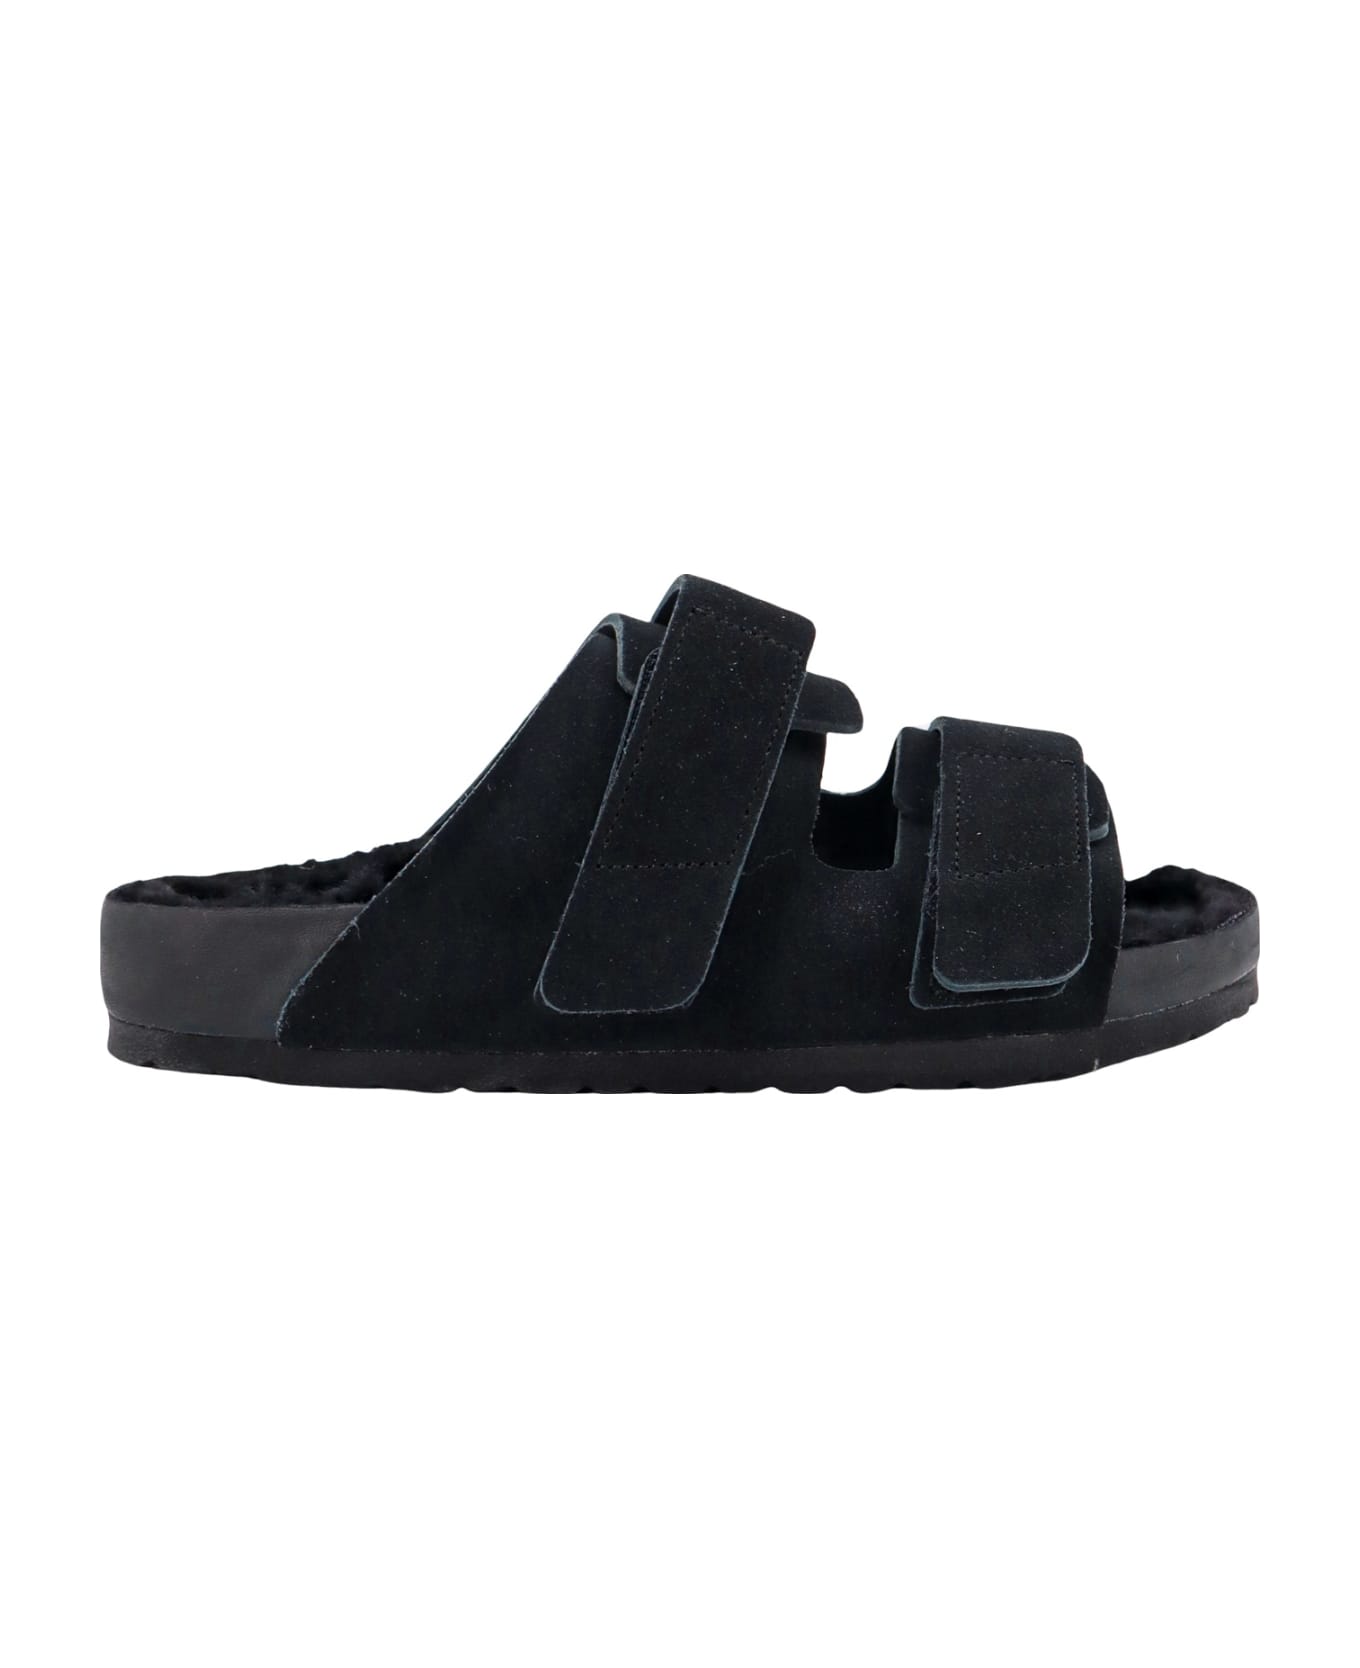 Birkenstock Uji Handstitch Sandals - Black